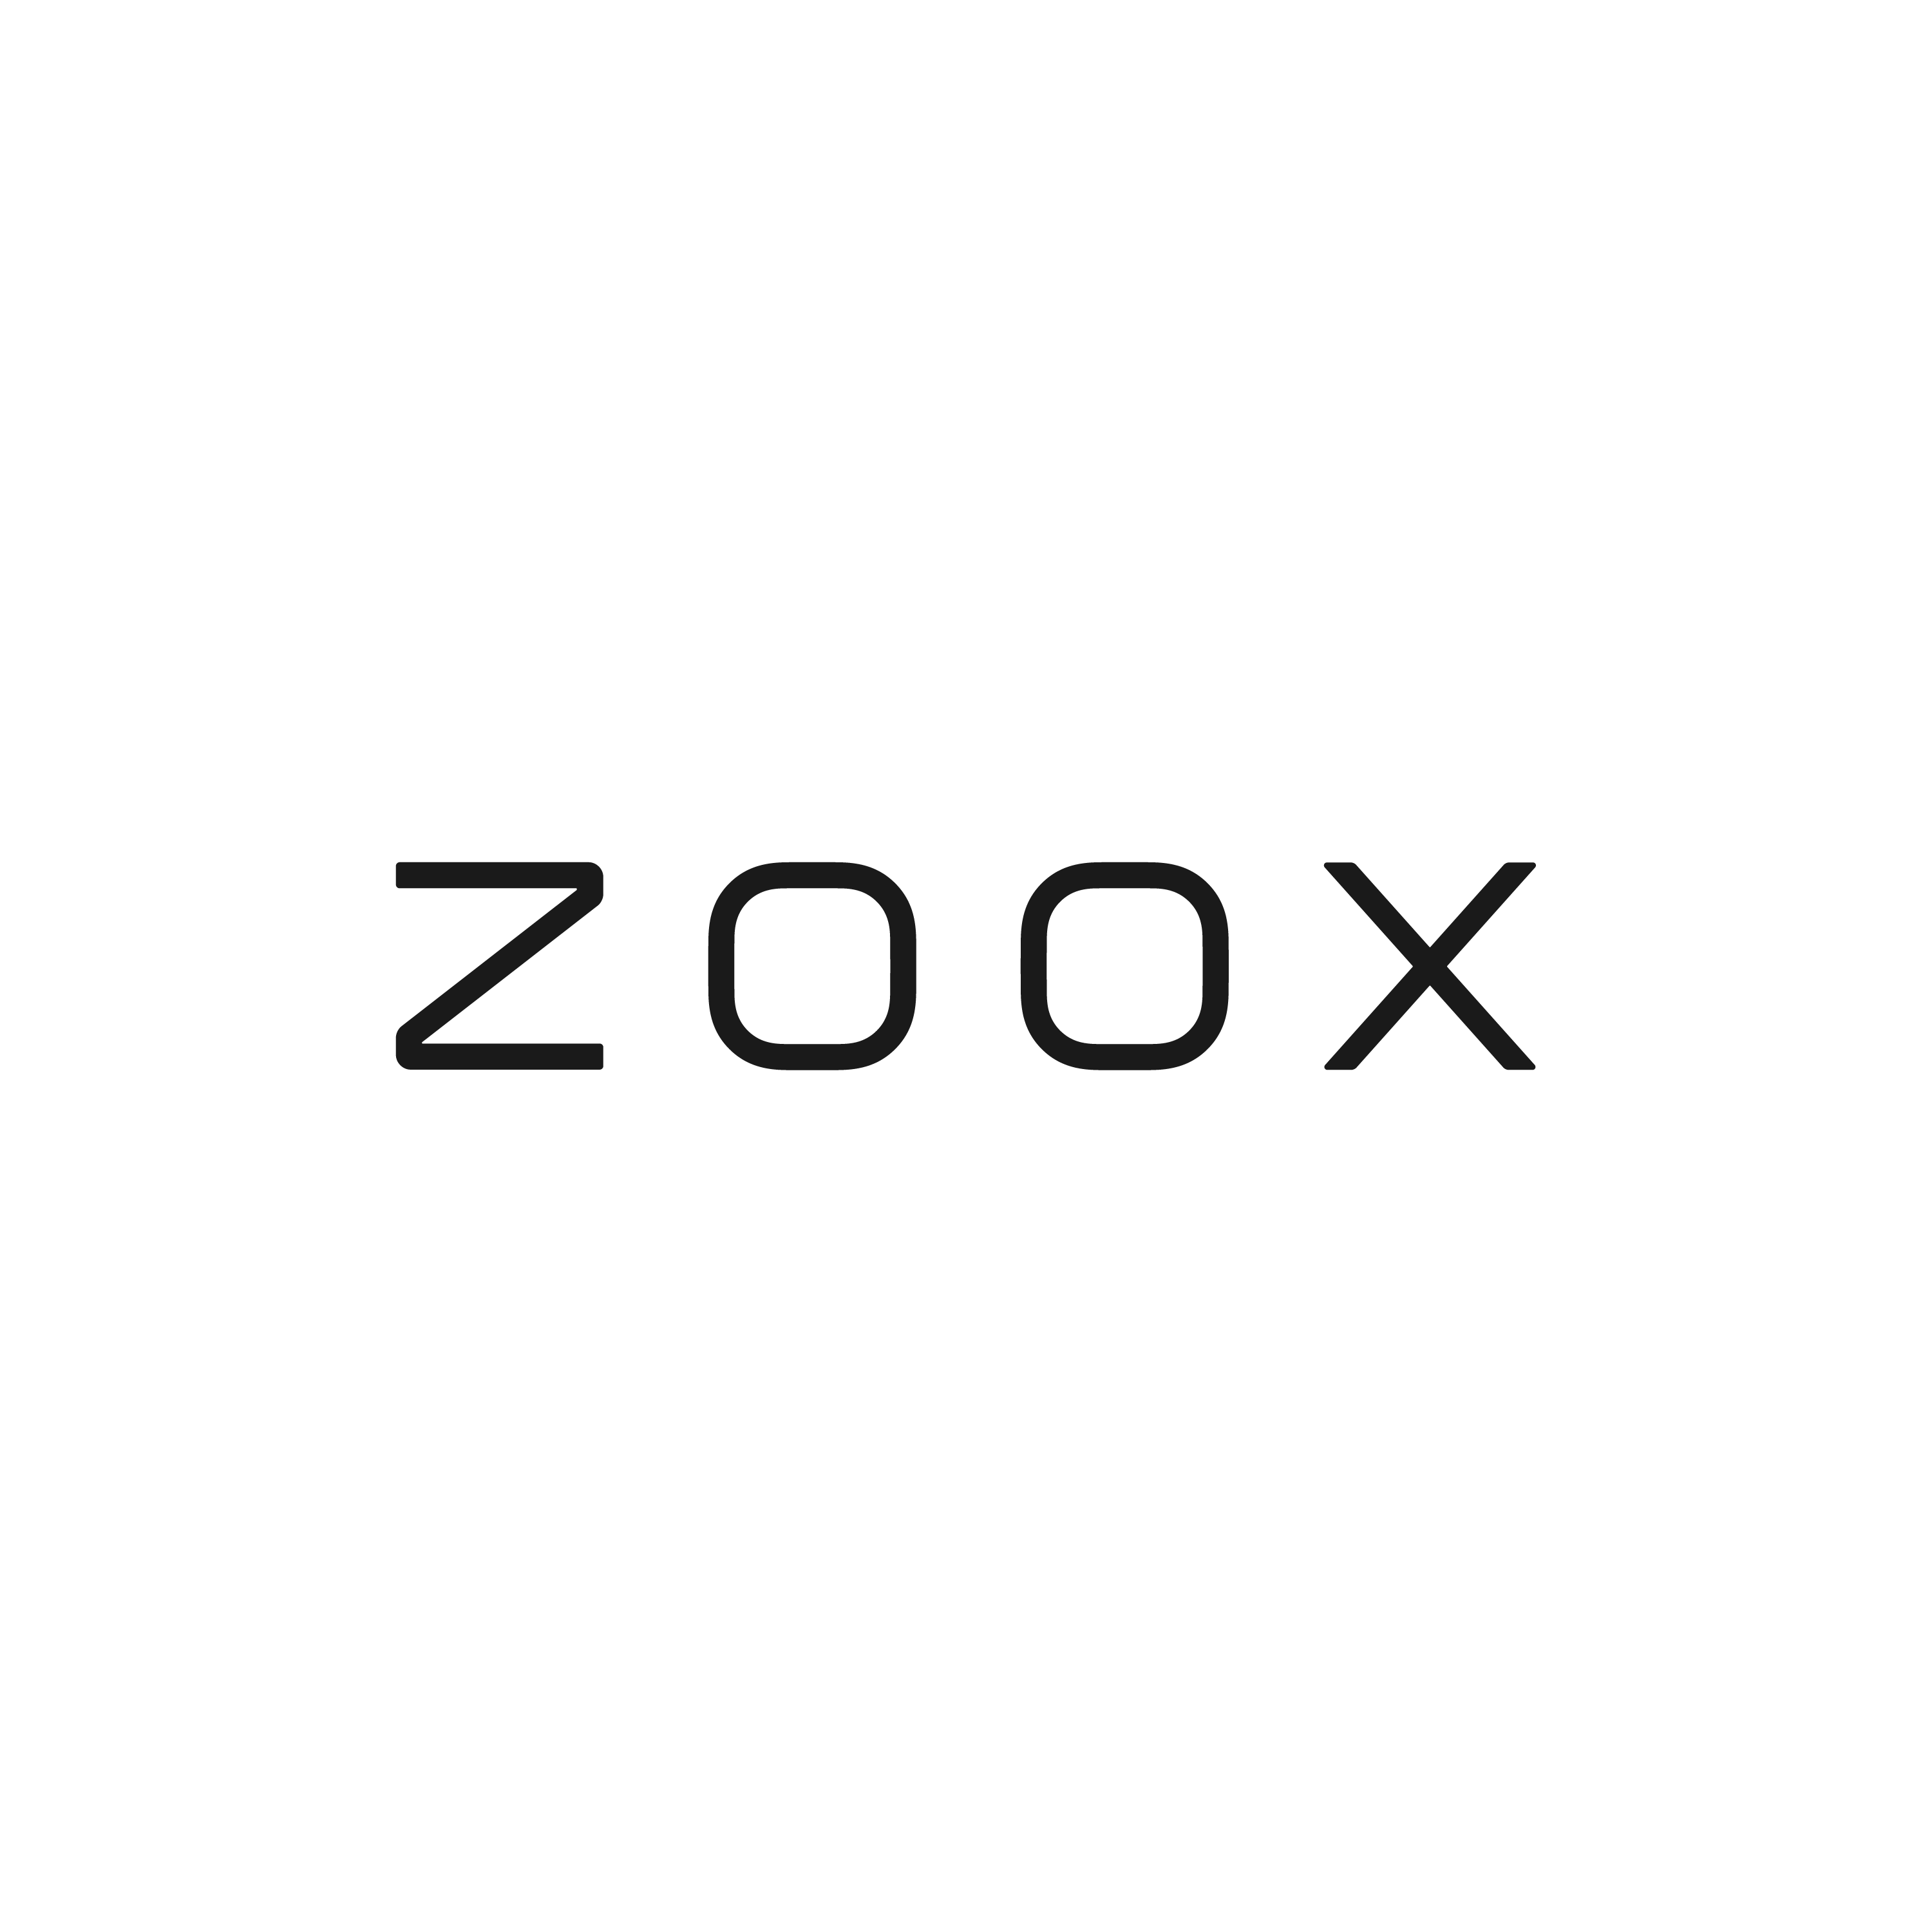 Zoox Logo Transparent Image